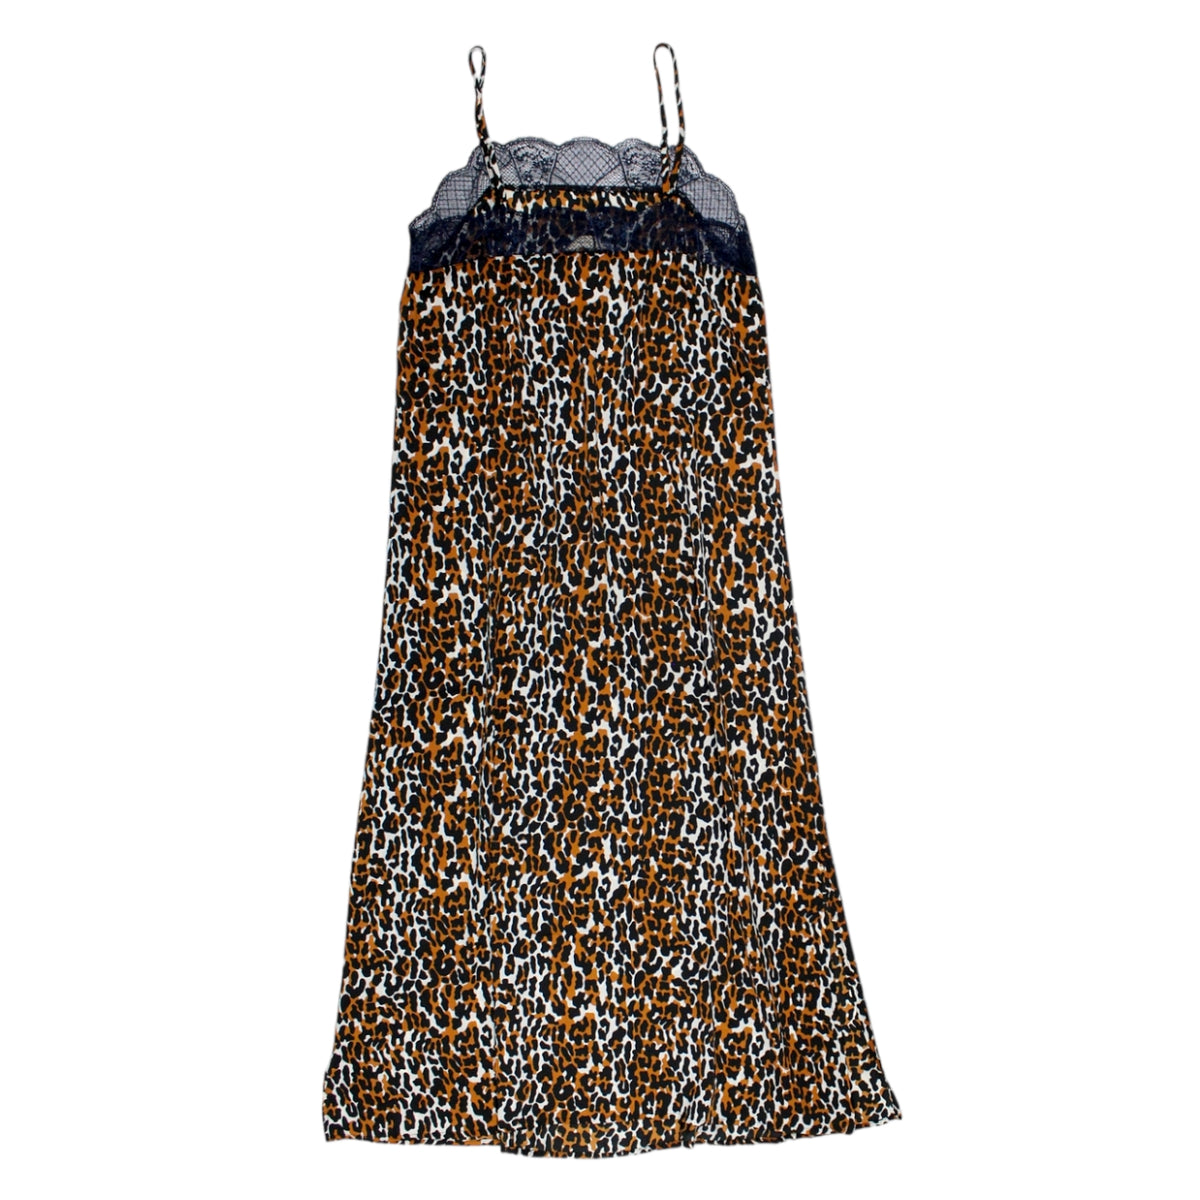 Hush Cream Leopard Lace Trim Slip Dress